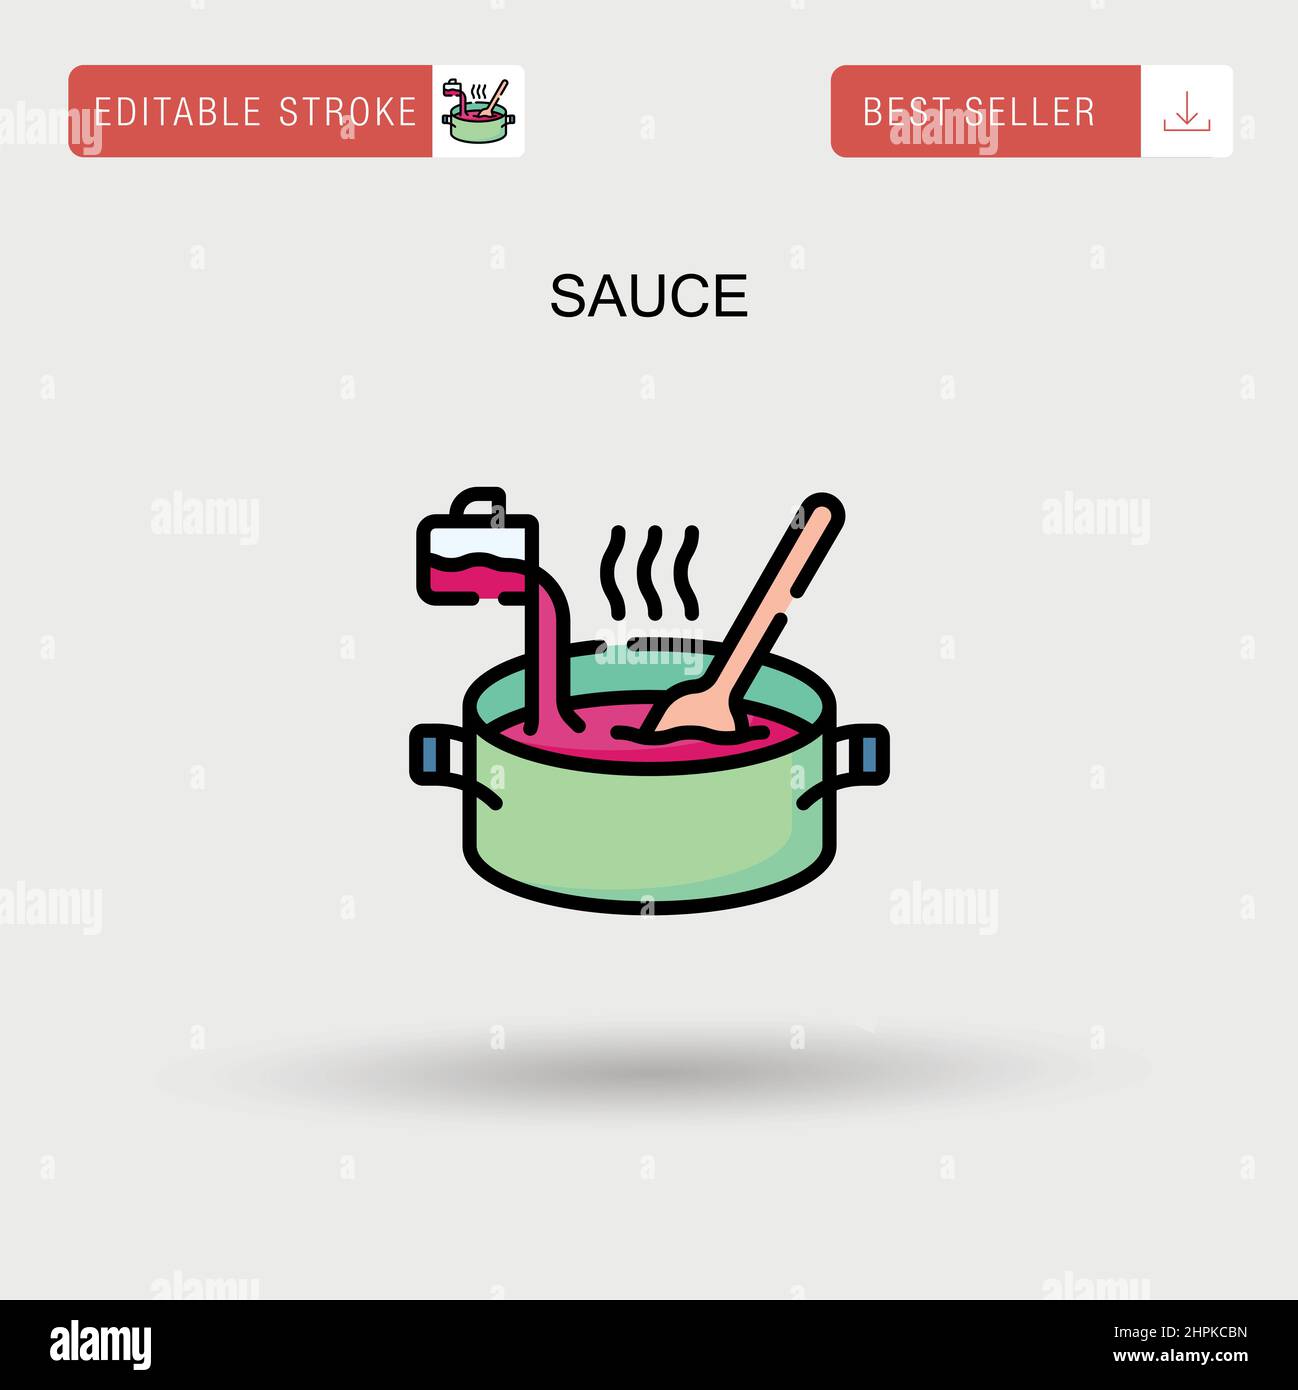 Sauce Simple vector icon. Stock Vector